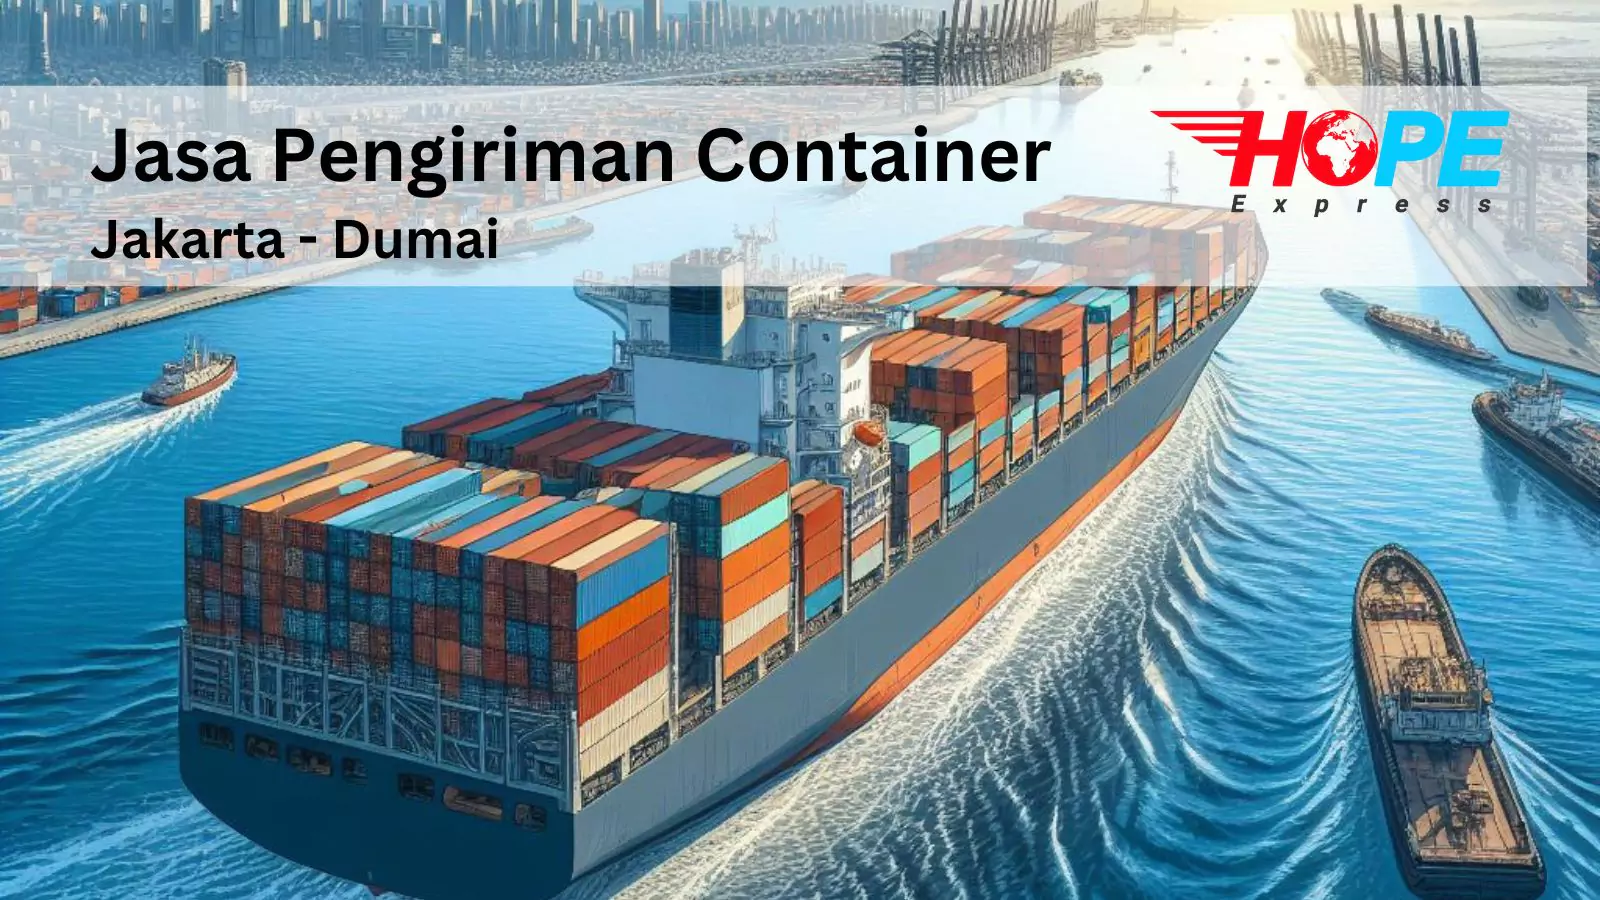 Jasa Pengiriman Container Jakarta Dumai